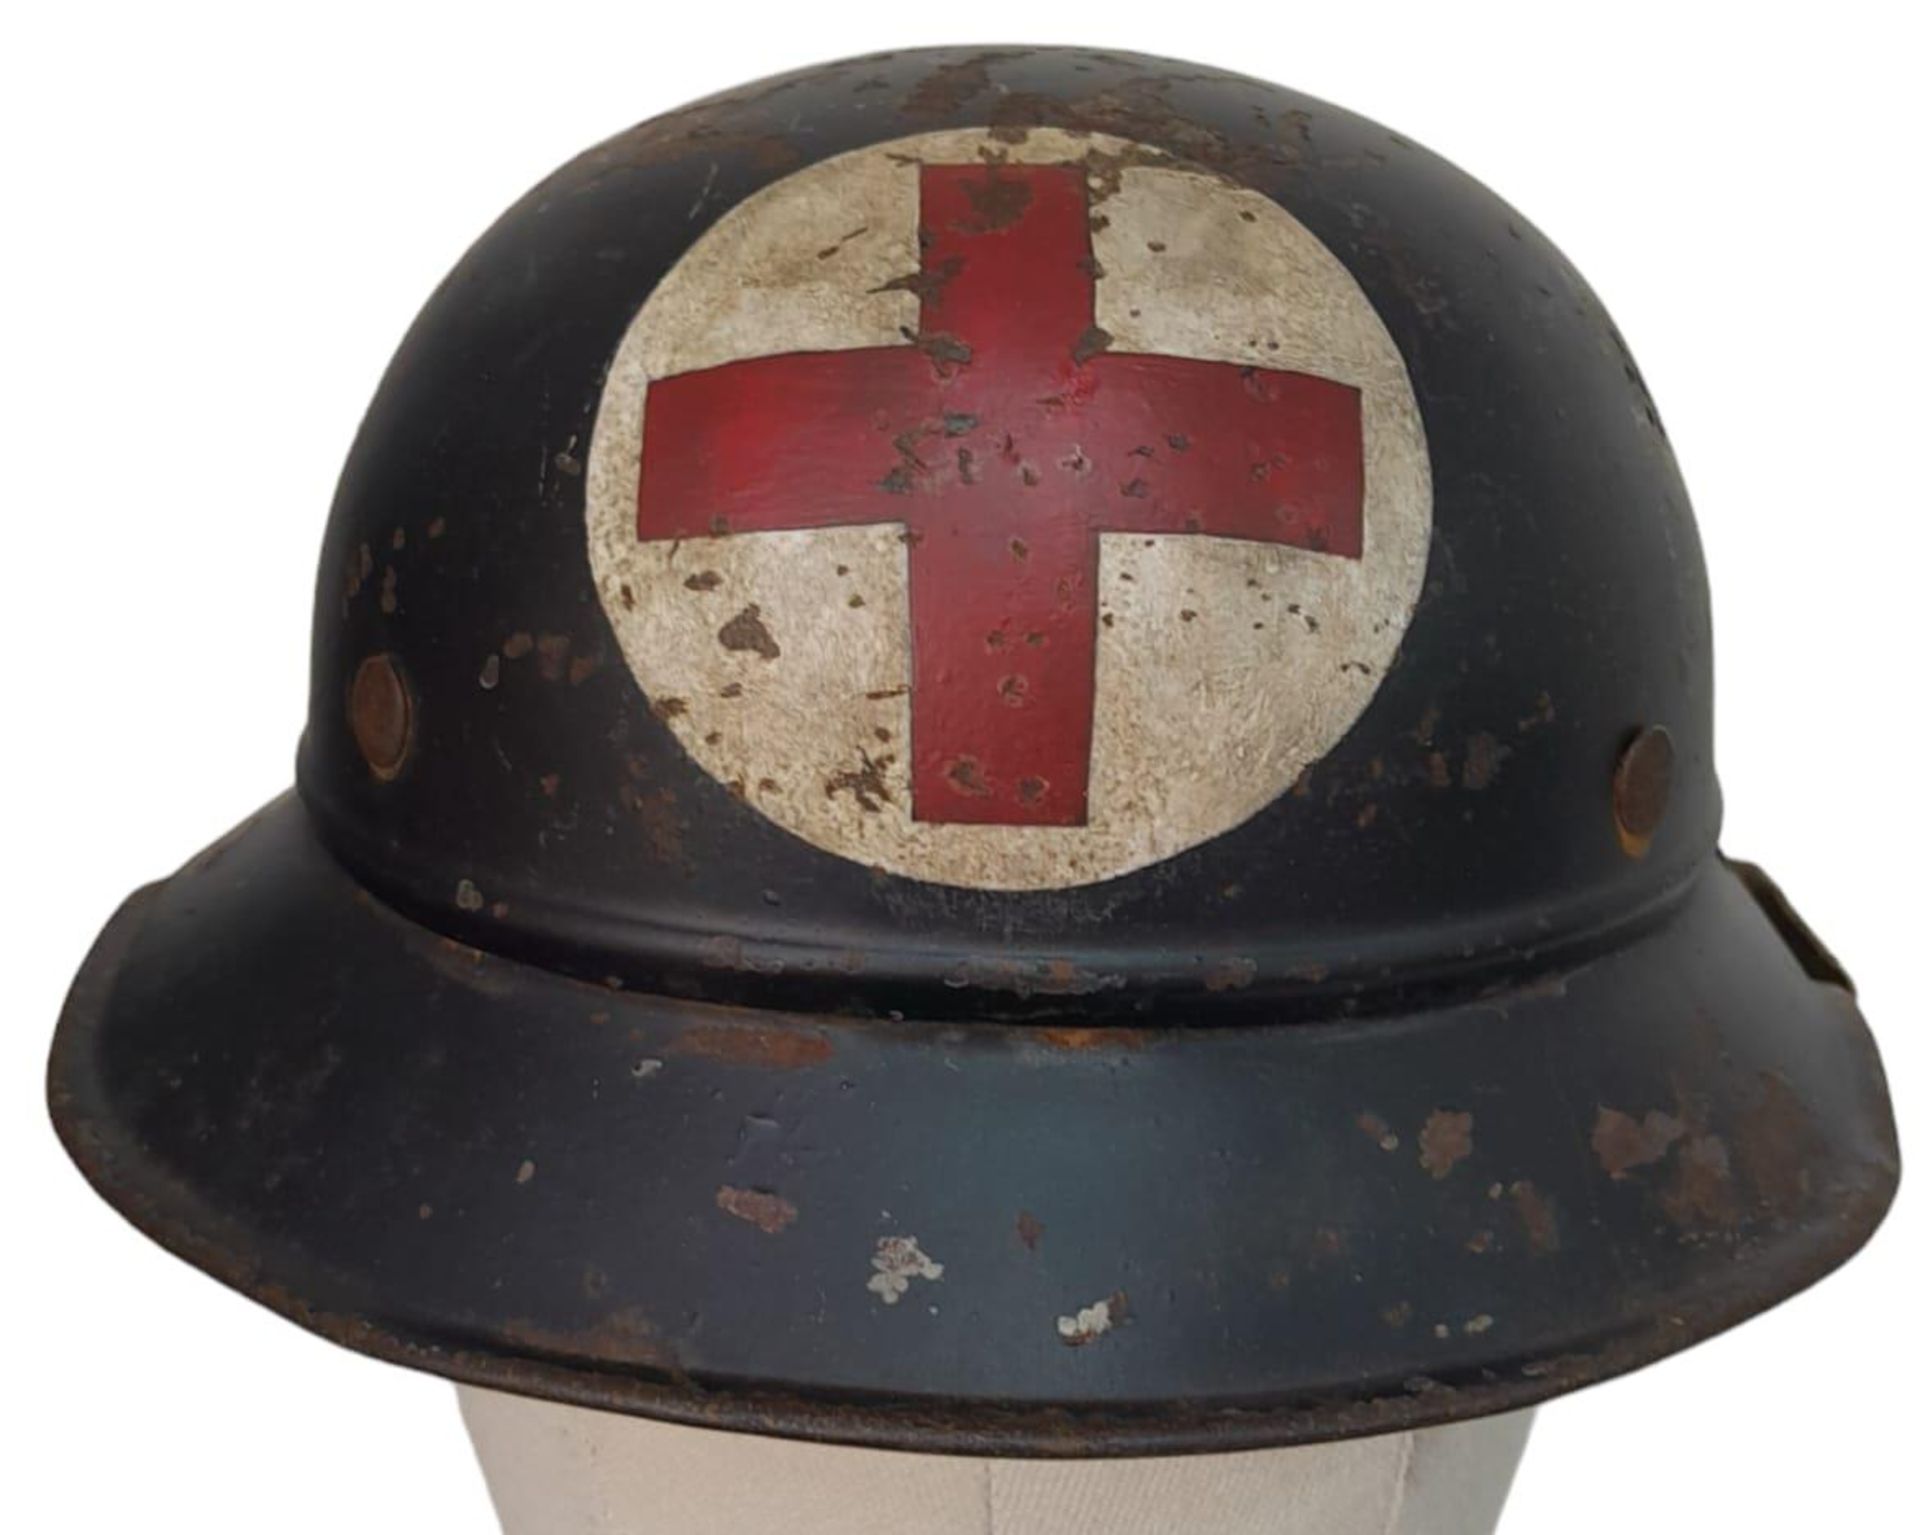 WW2 German Air Raid Warden and Medics Helmet from Bremen Motor Werks (BMW) Factory.